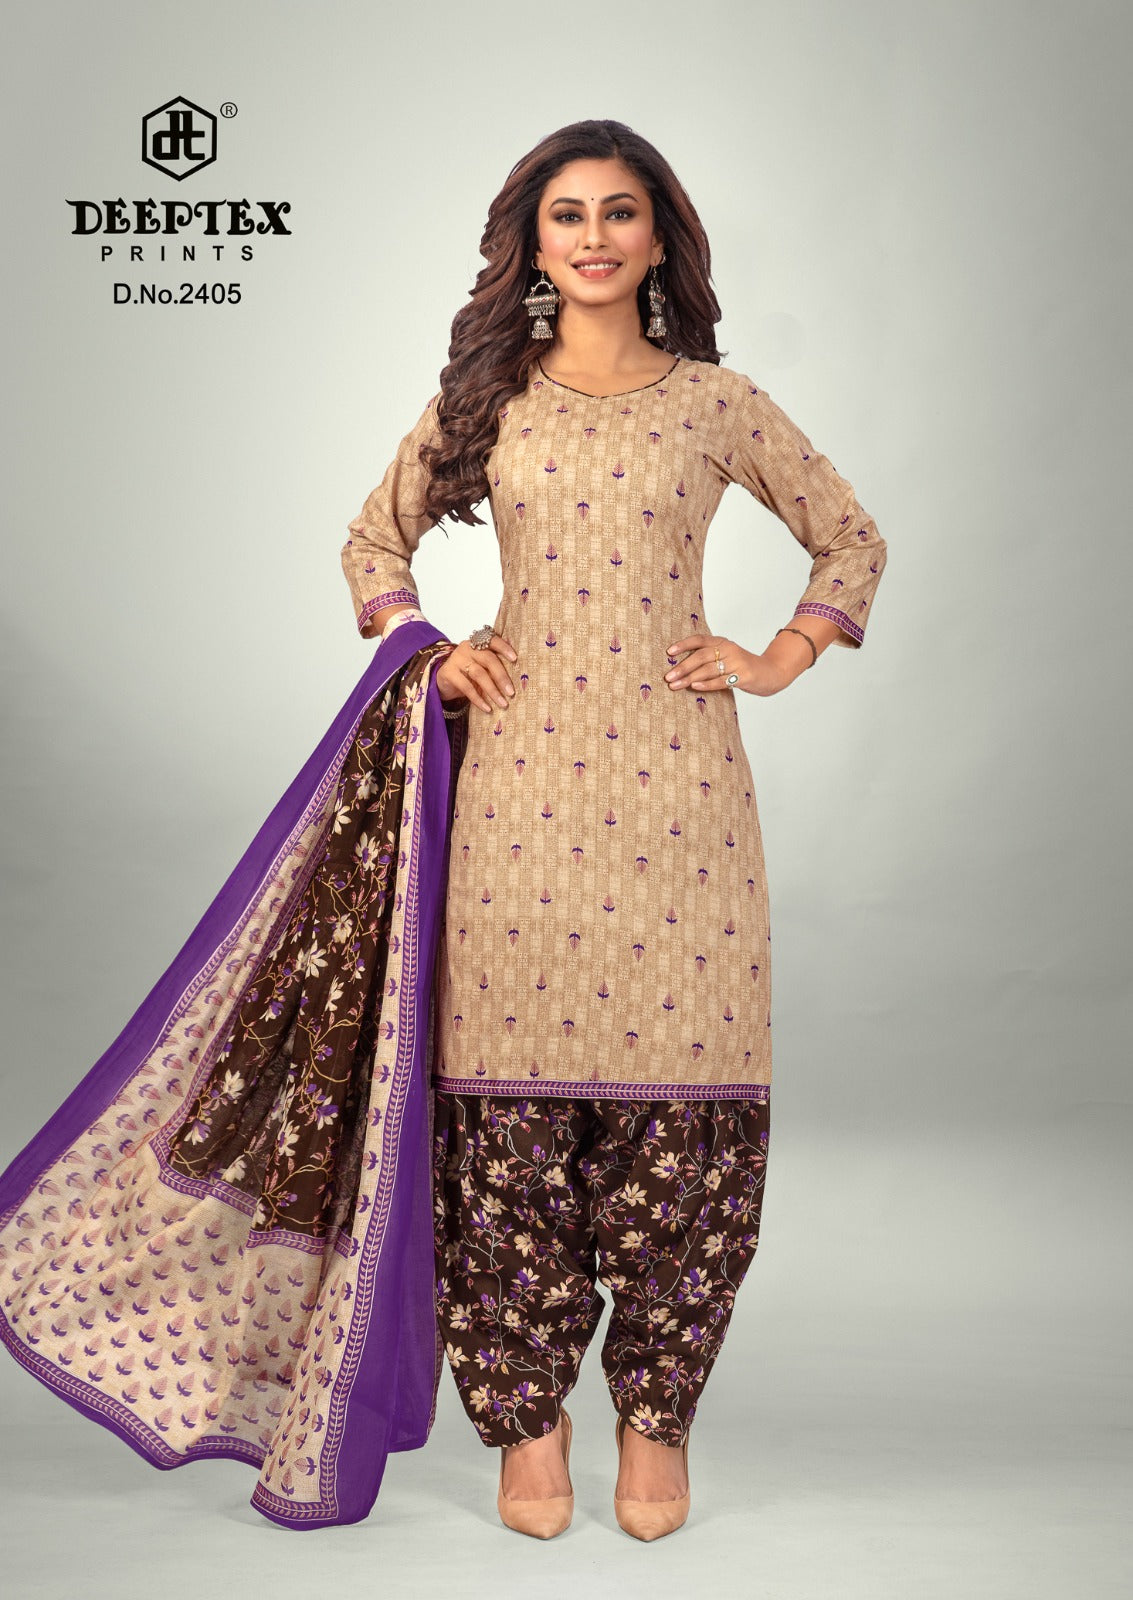 Deeptex Pichkari Vol 24 Cotton Printed Dress Material Wholesale Supplier In Jetpur